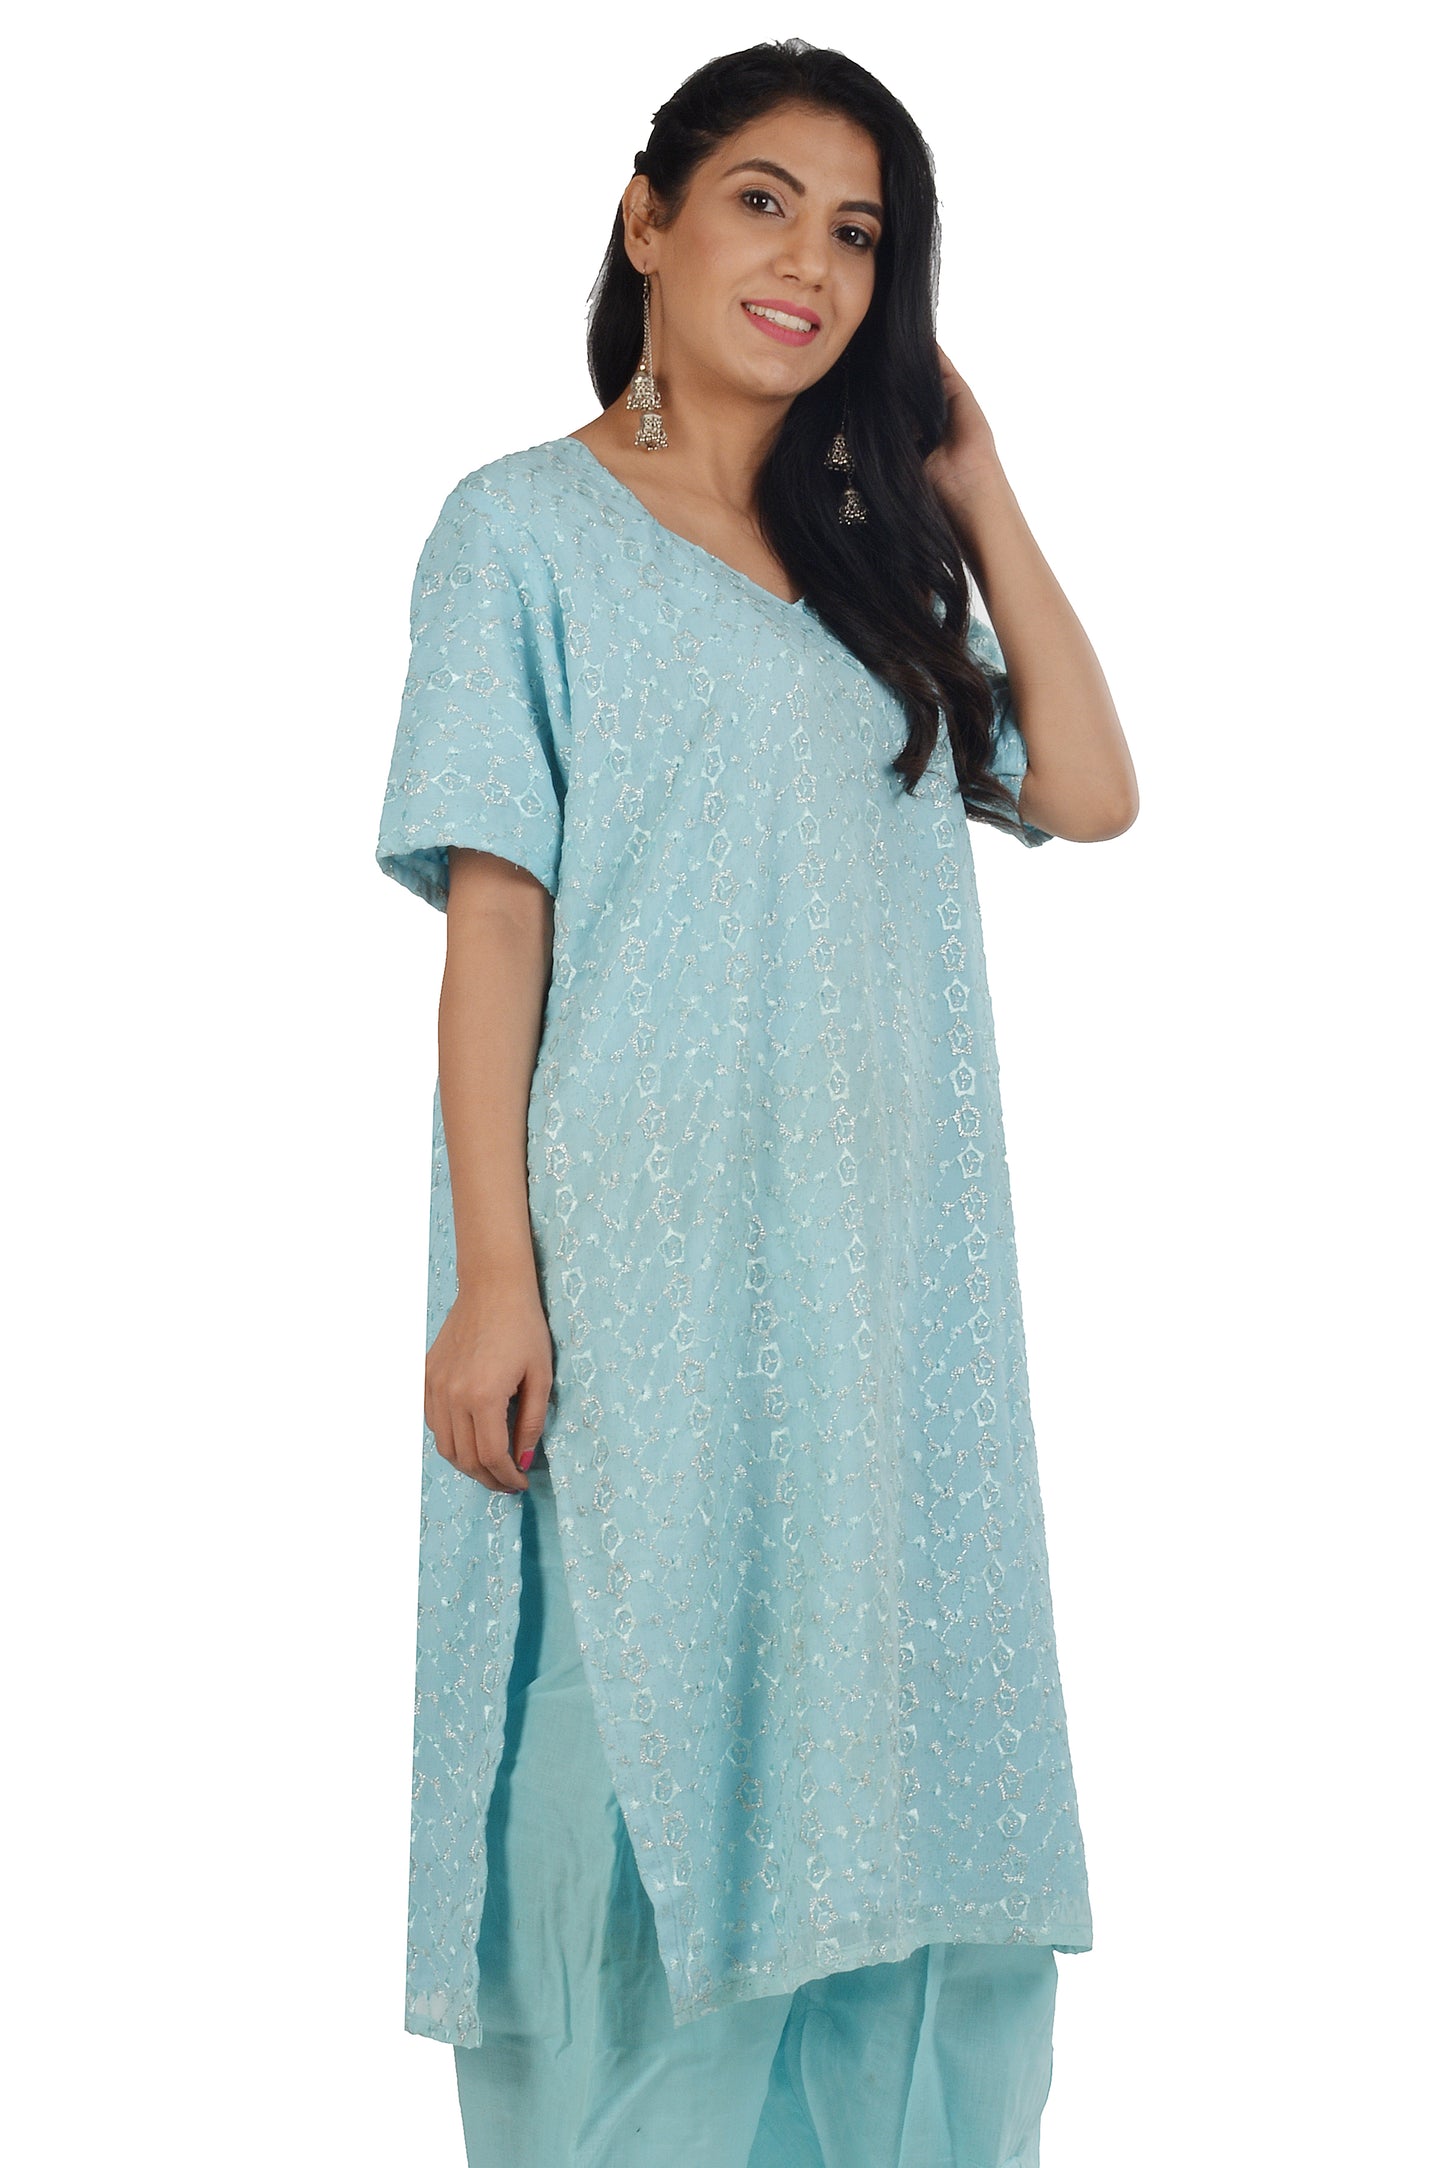 Blue wear Formal Salwar kameez Dress Chest Size 46